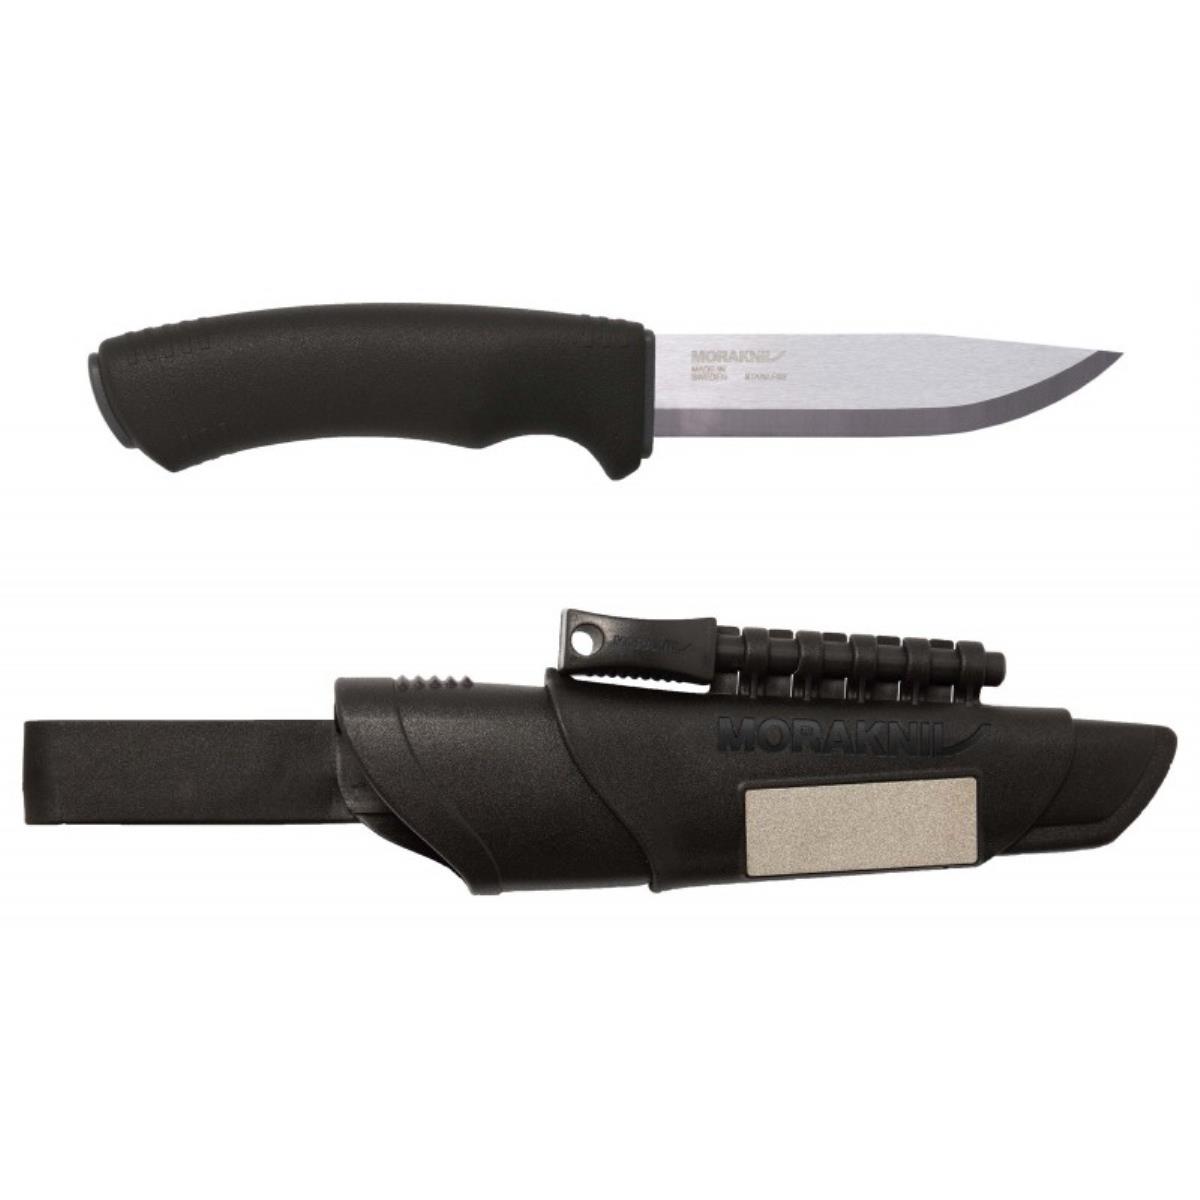 Нож Bushcraft Survival Black Ultimate Knife (11835) Morakniv нож с фиксированным лезвием morakniv bushcraft forest сталь sandvik 12c27 ручка резина пластик